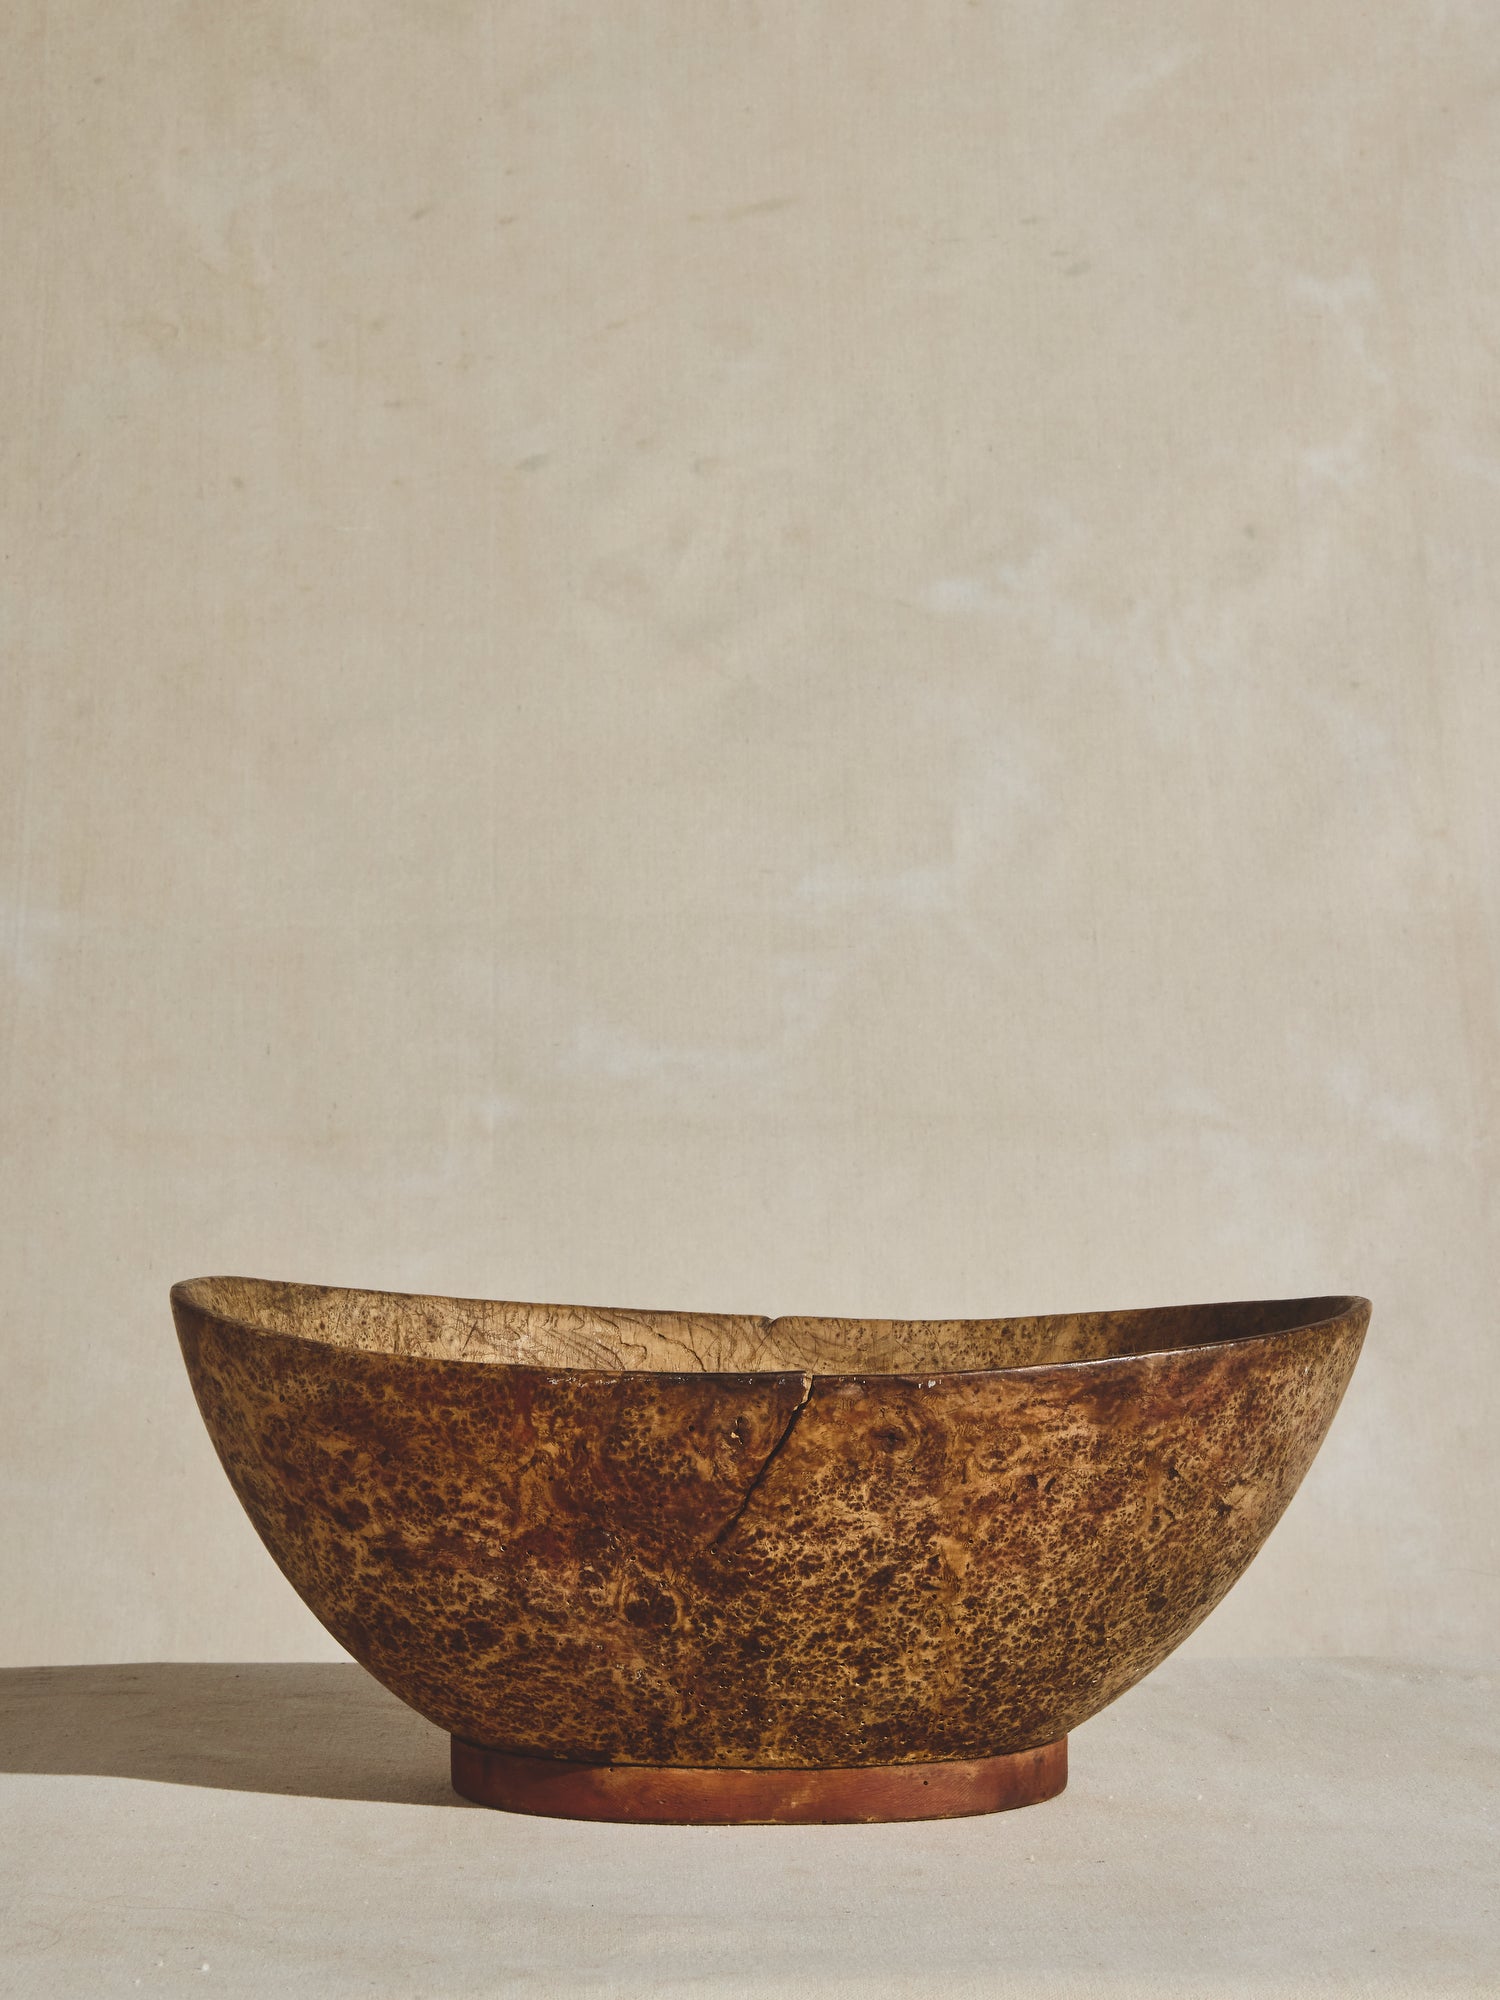 A large antique burled wood bowl